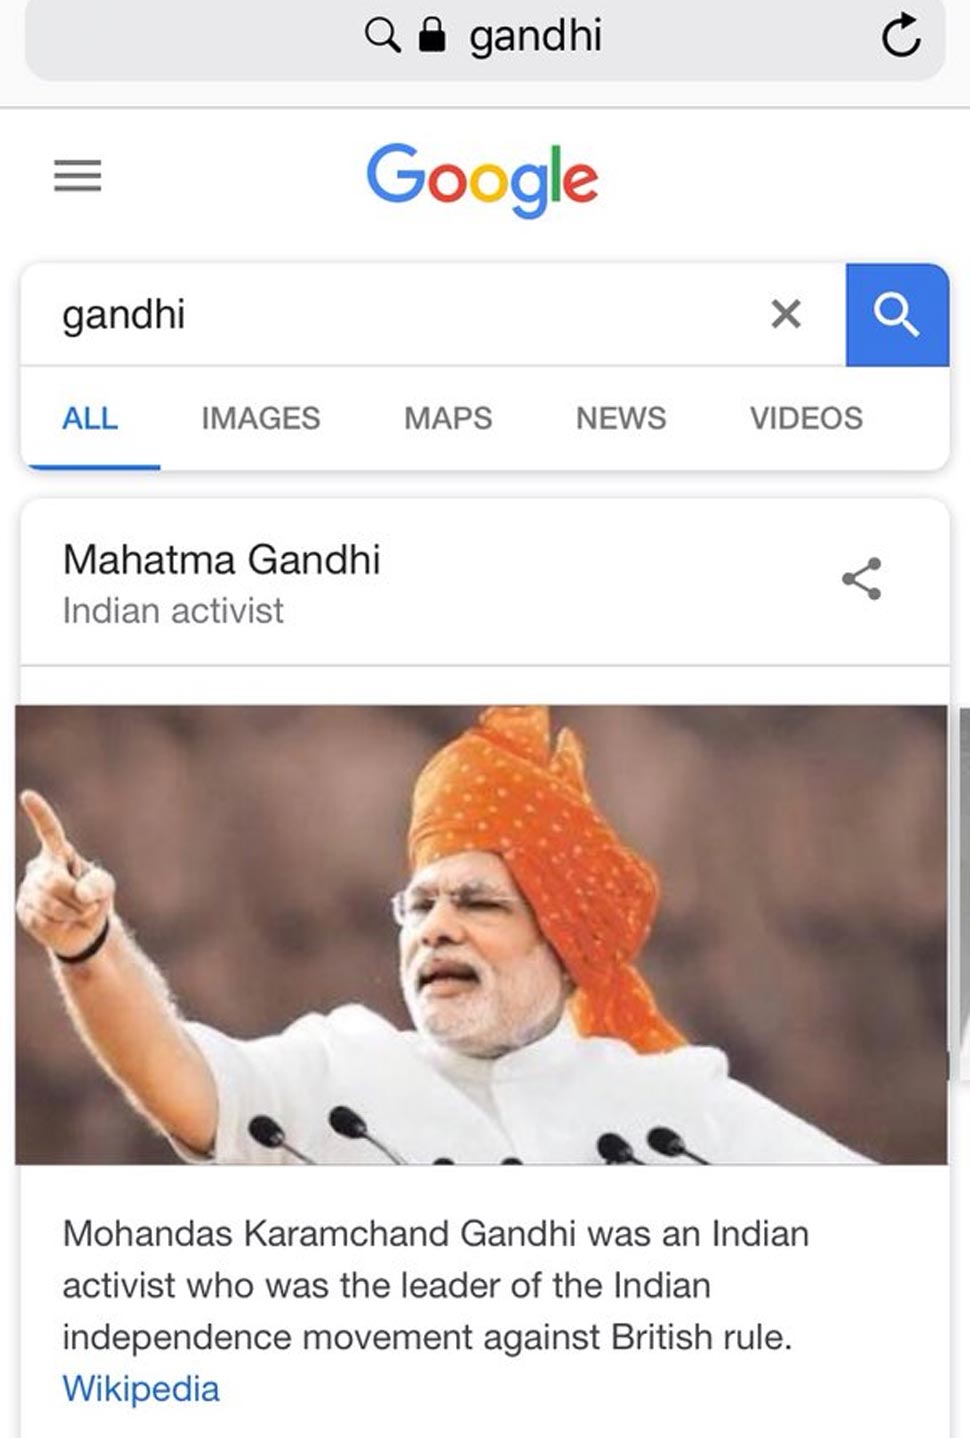 Google show Pm Modi photo on typing Mahatma Gandhi Name